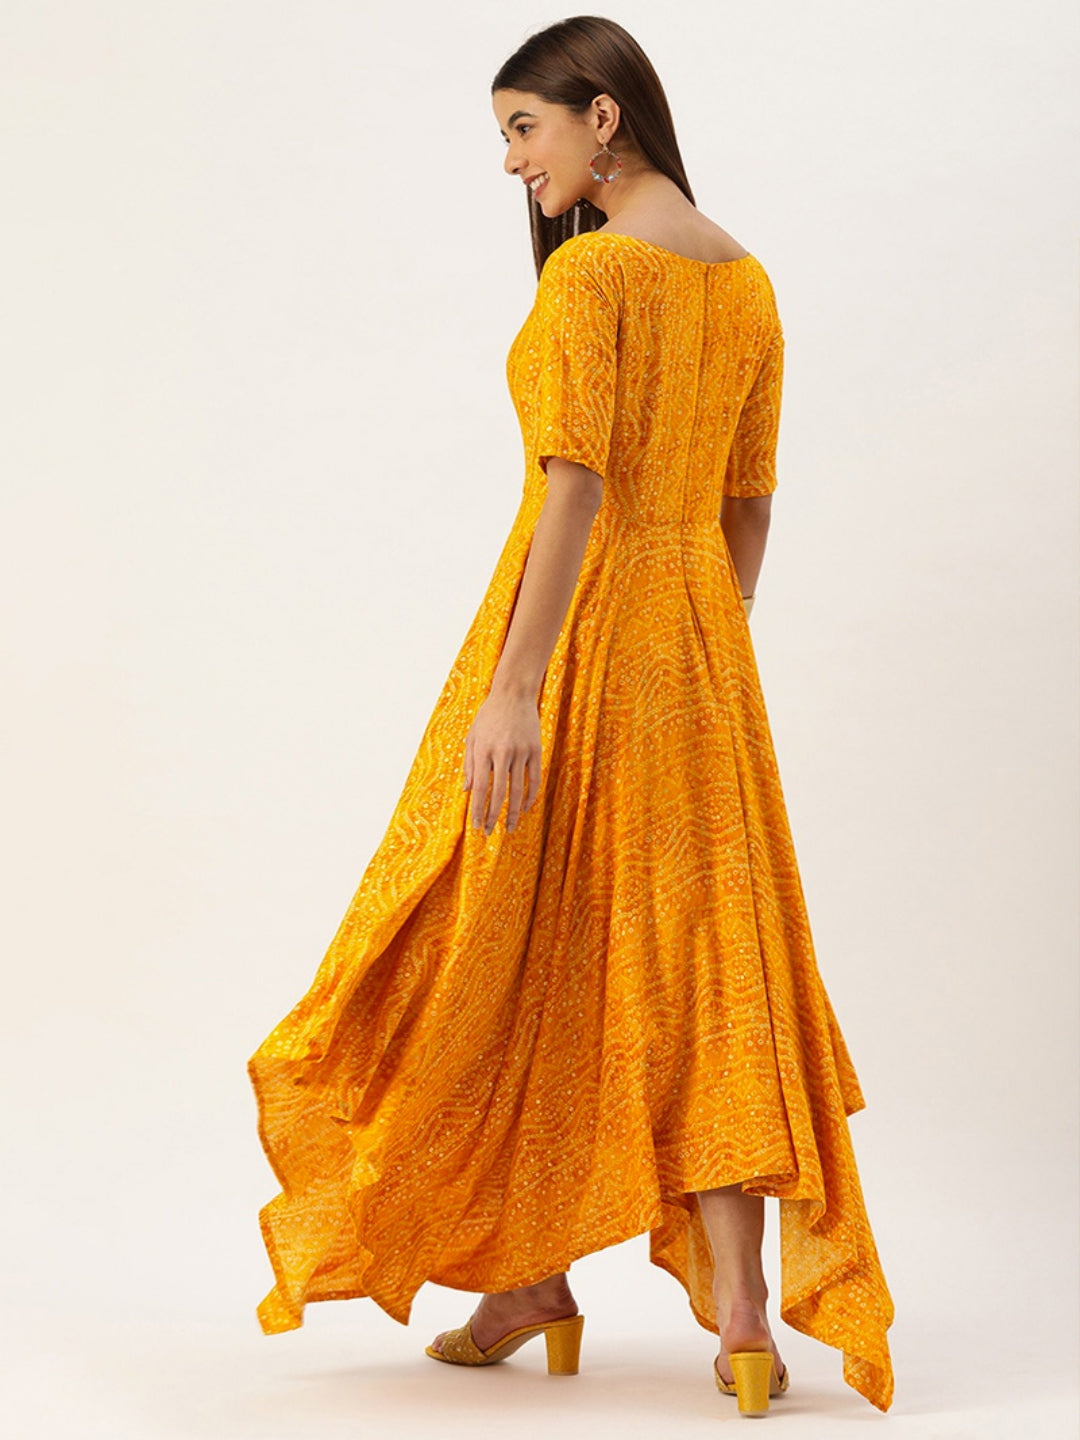 Yellow-Print-Viscose-Handkerchief-Style-Dress